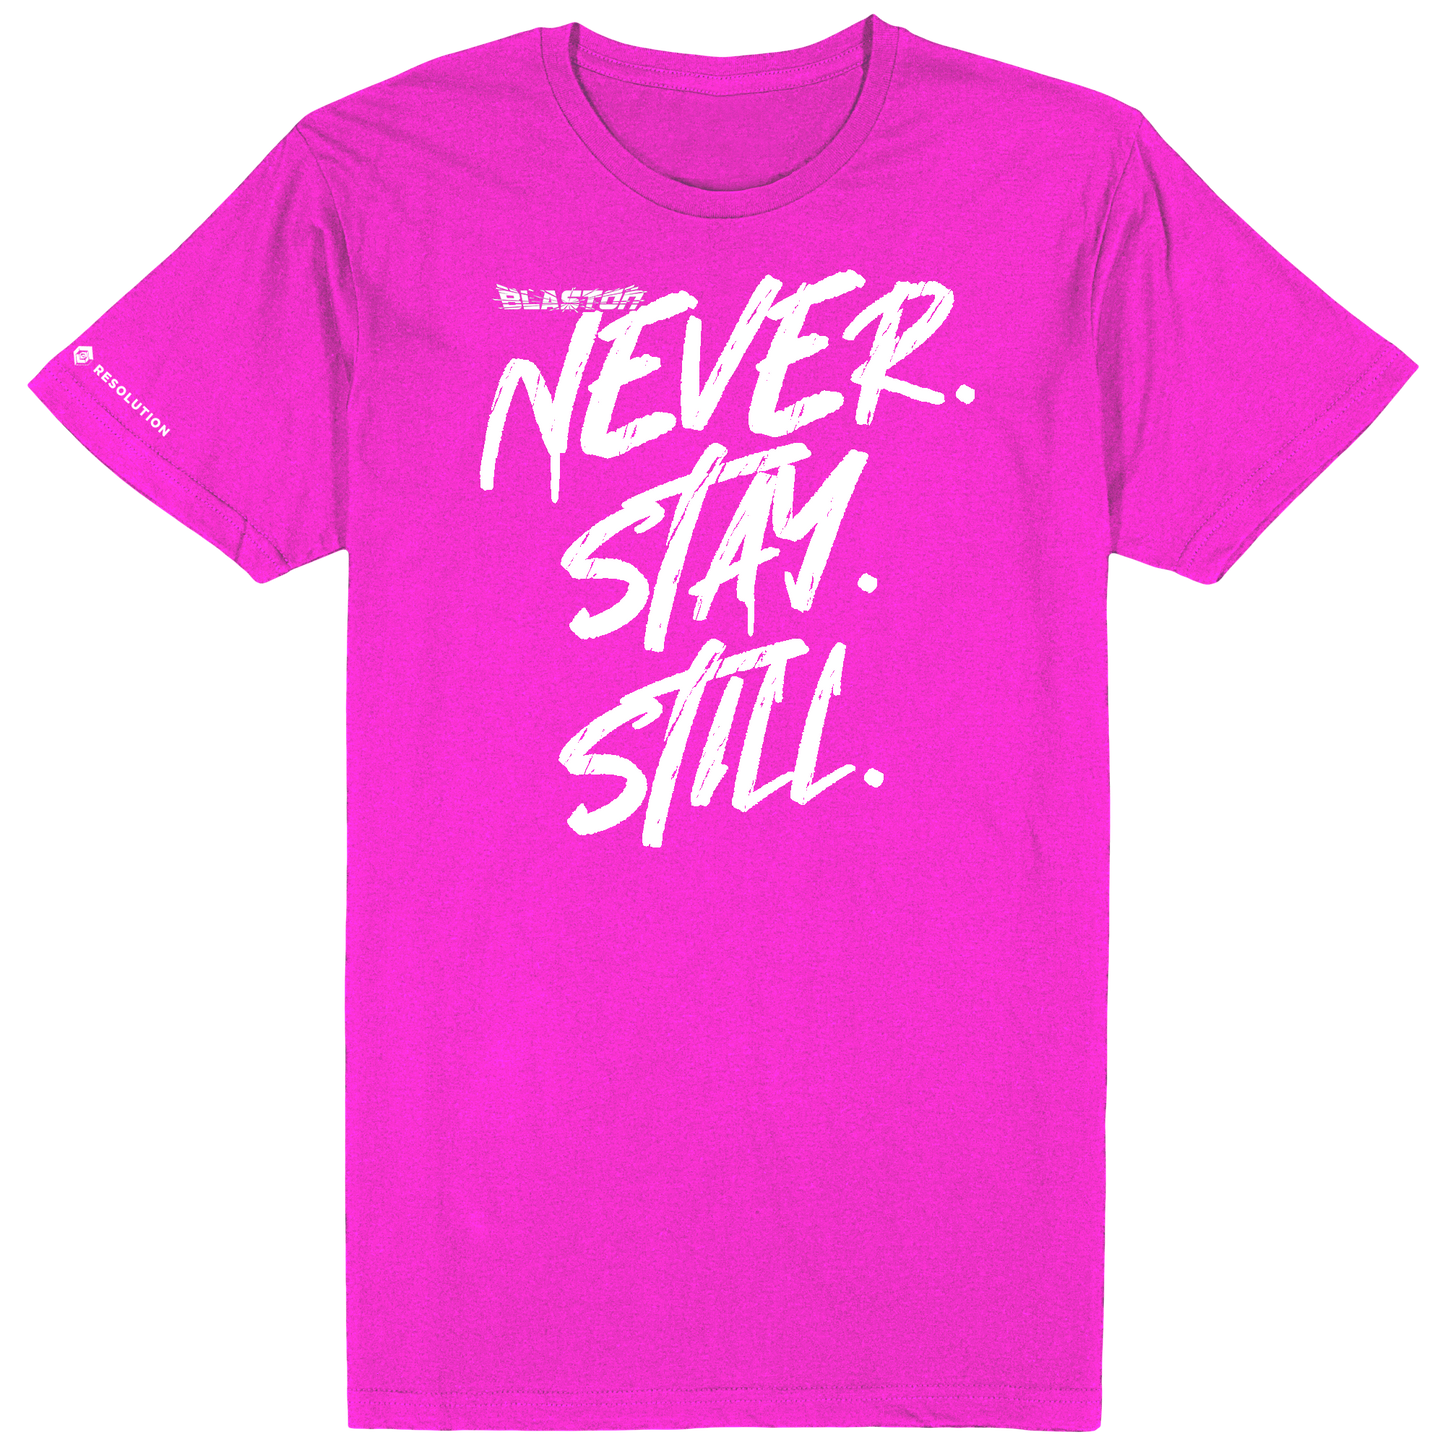 Blaston Never. Stay. Still. Tee - White/Pink